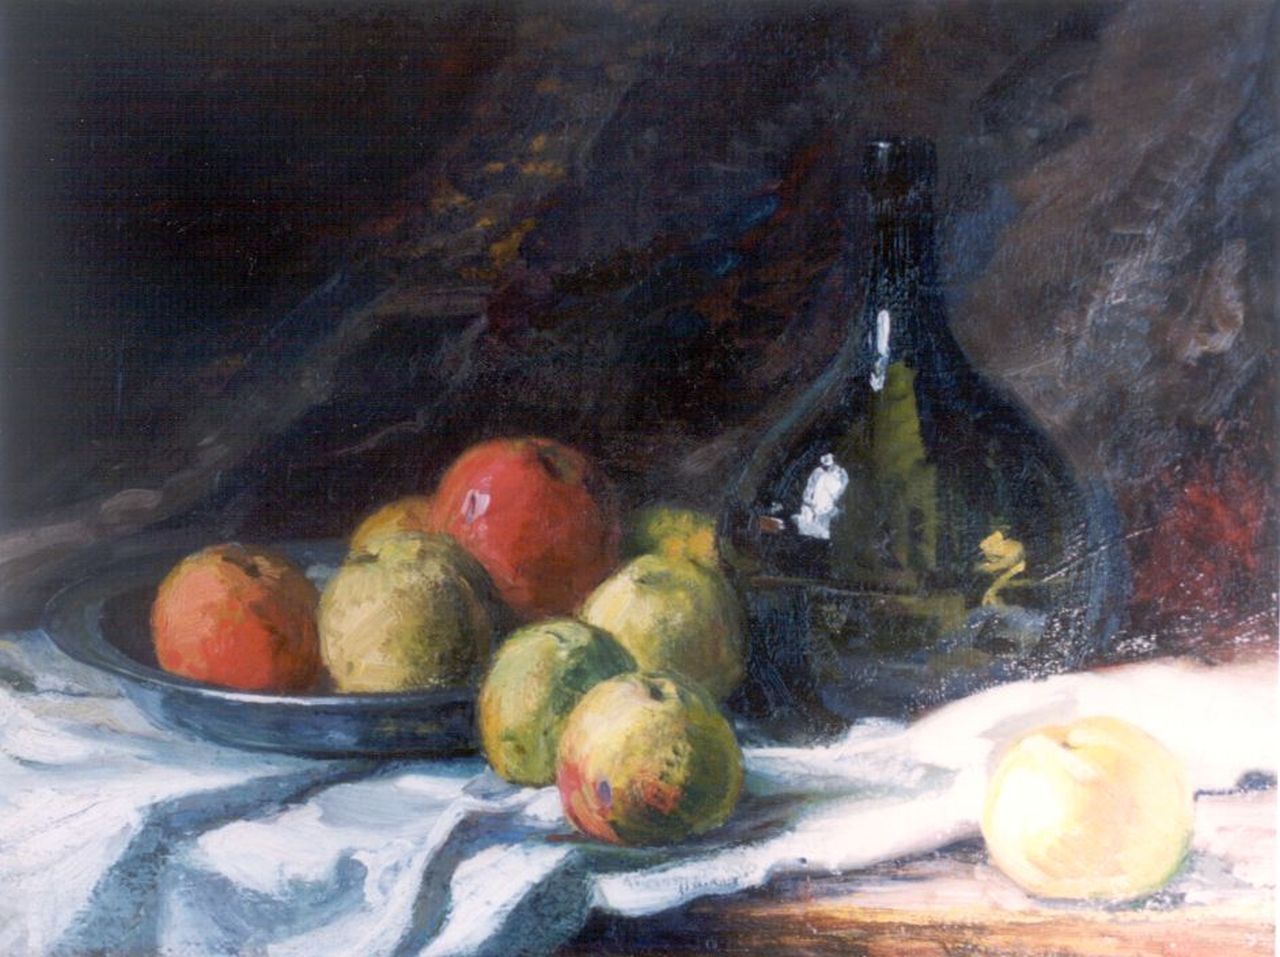 Hemelman A.  | Albert Hemelman, A still life with apples and a bottle, Öl auf Leinwand 47,0 x 62,0 cm, signed l.r.